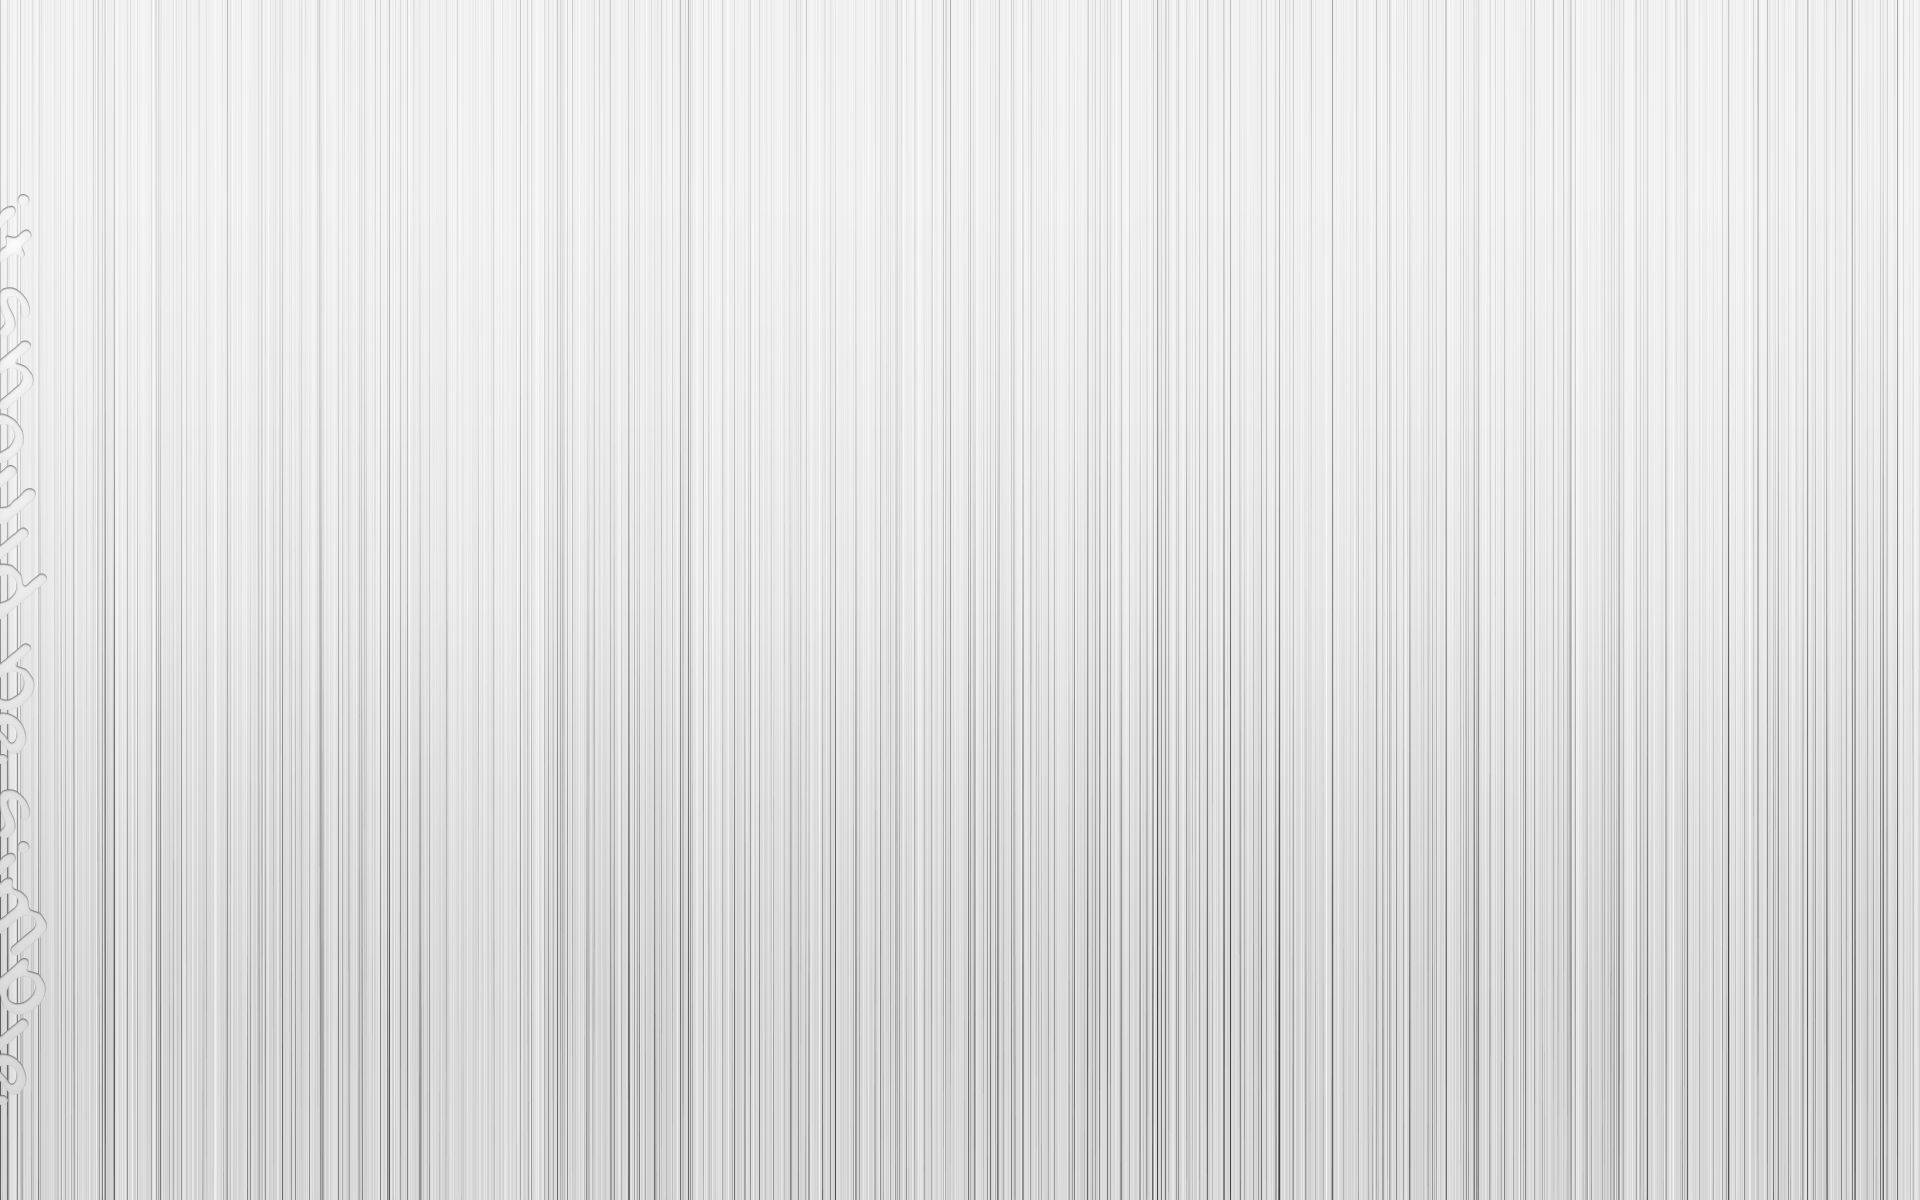 White Full Screen Black Vertical Lines Background